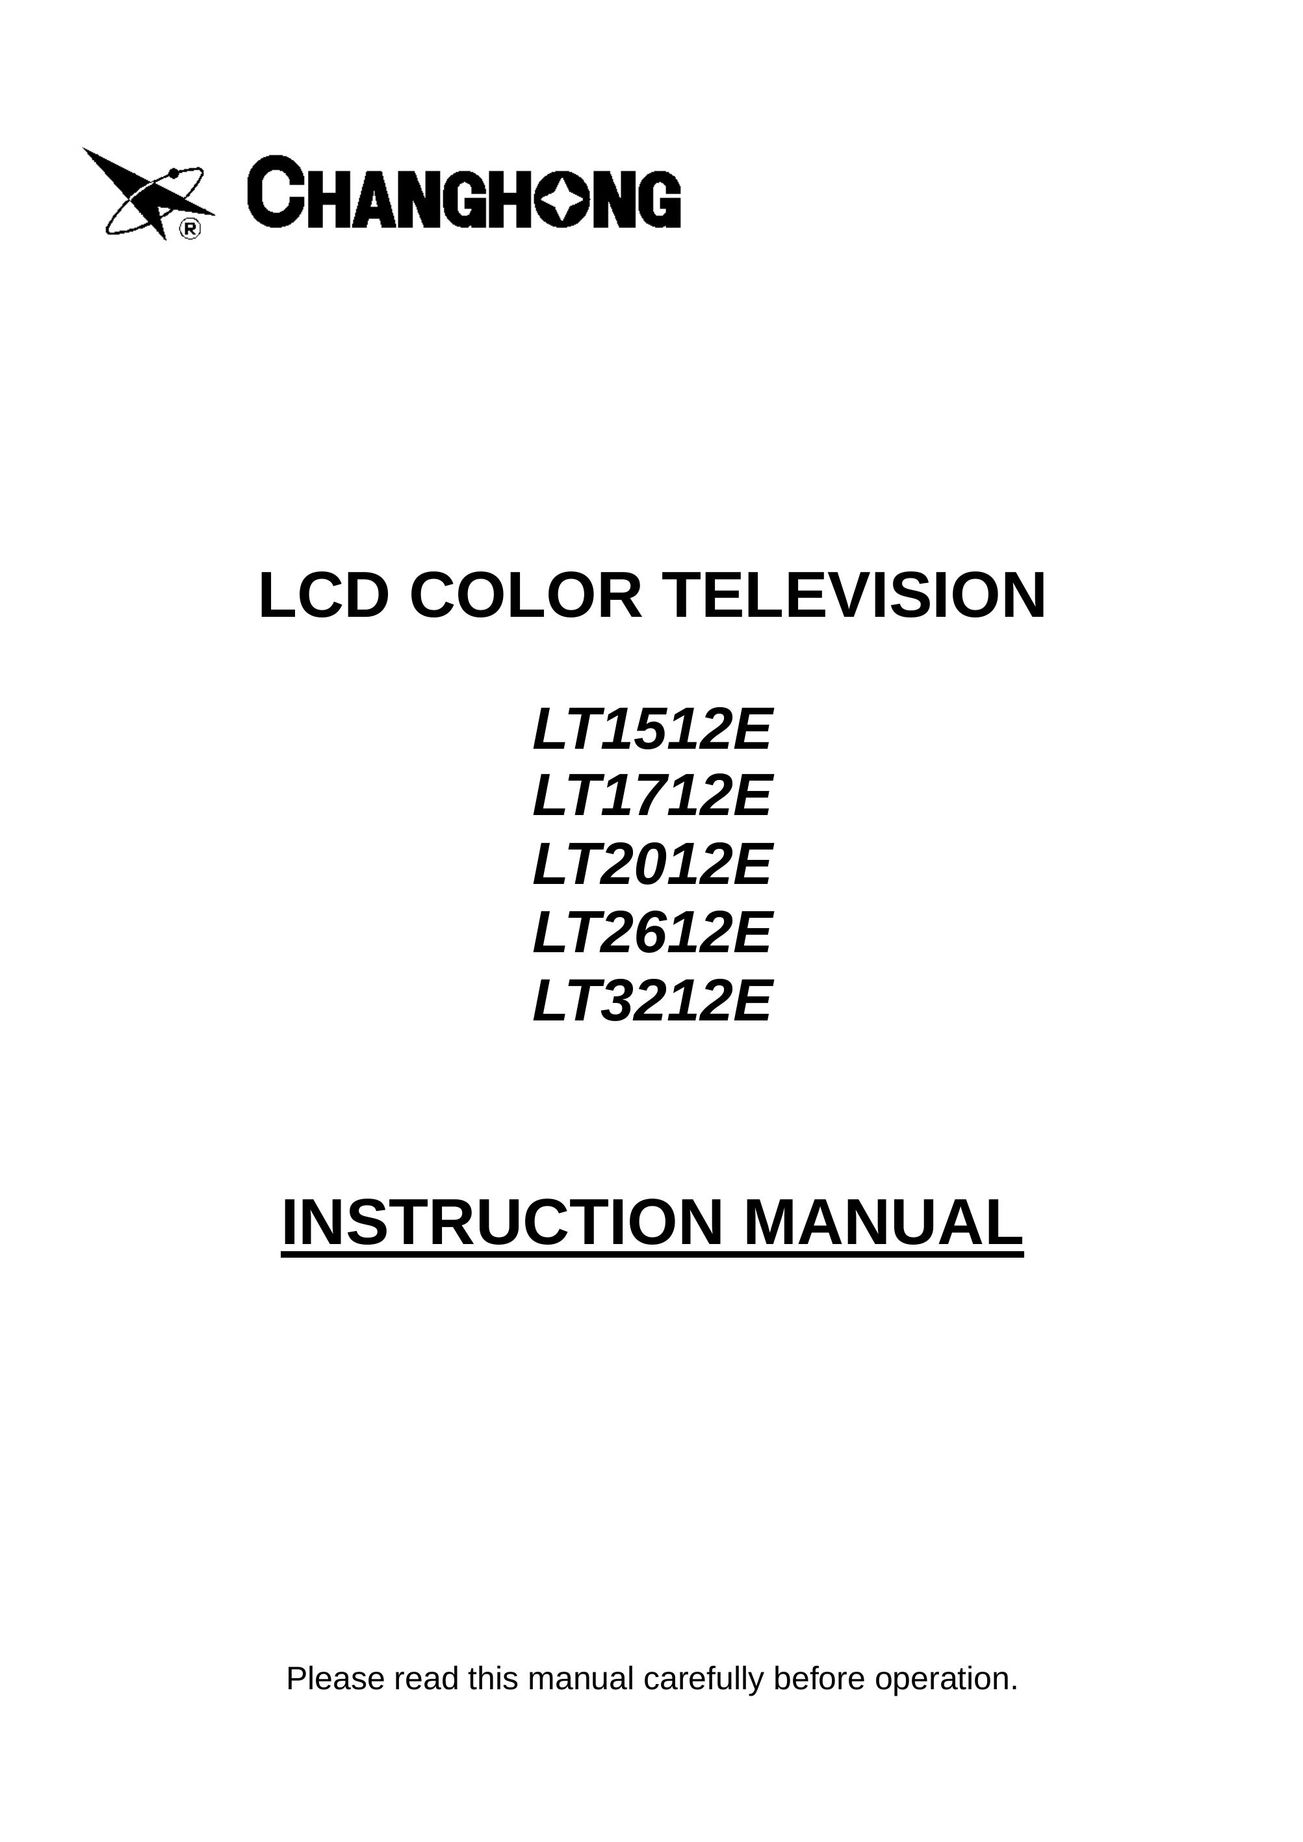 Changhong Electric LT1512E, LT1712E, LT2012E, LT2612E, LT3212E Flat Panel Television User Manual